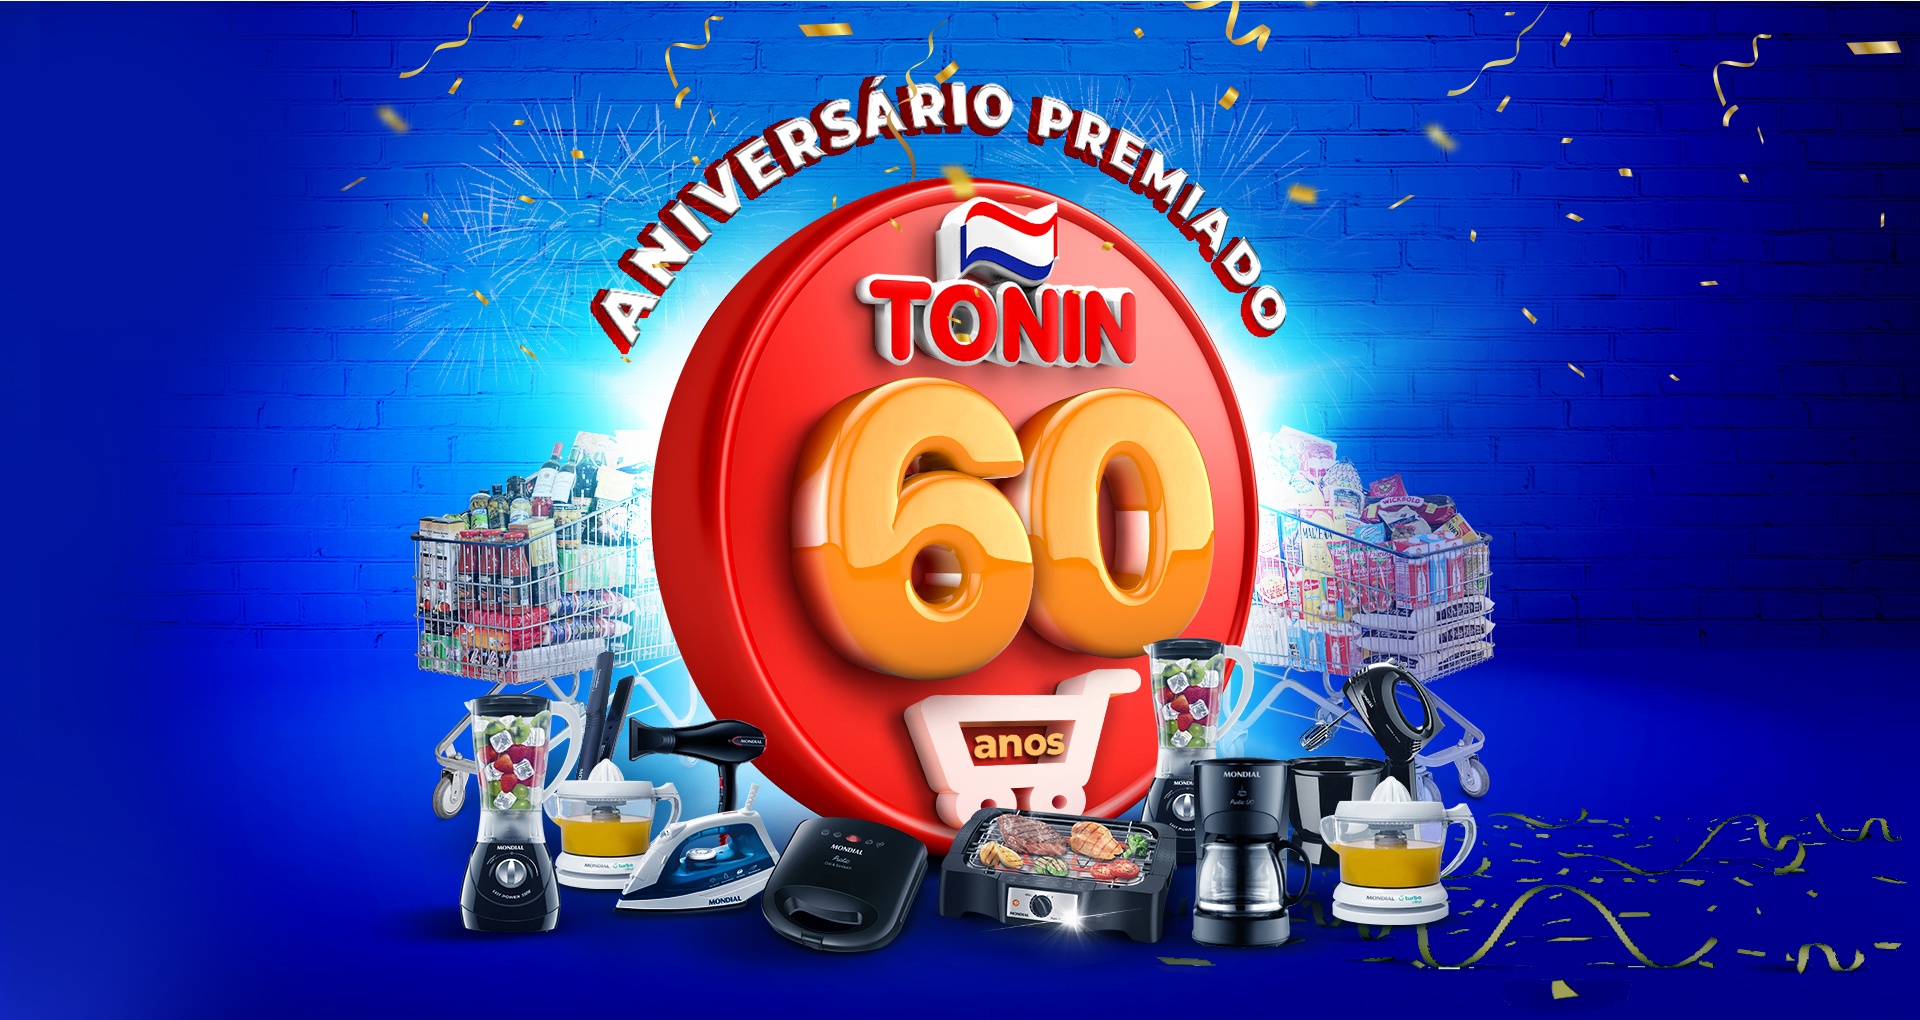 Aniversário Premiado 60 Anos Tonin